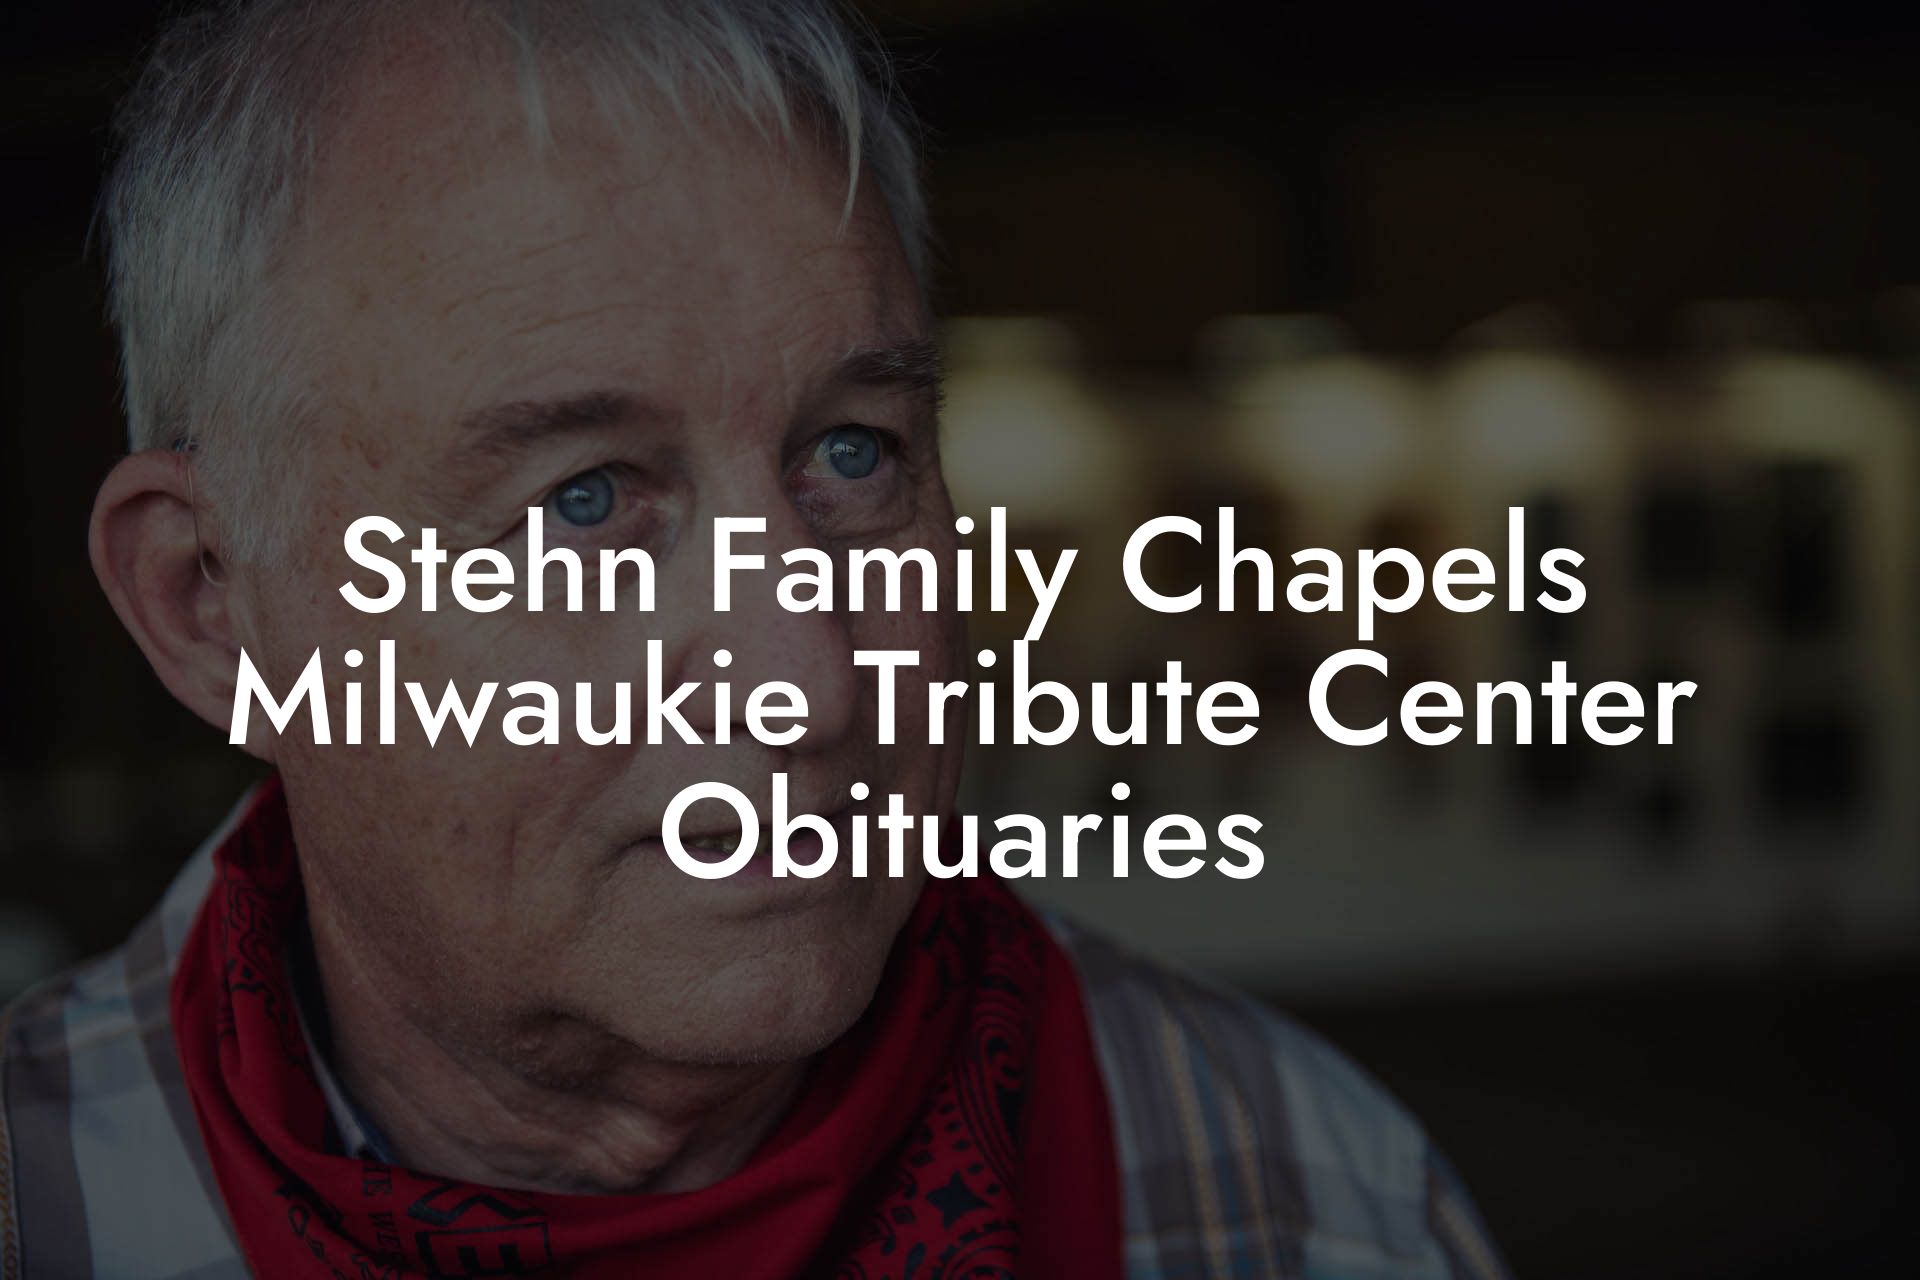 Stehn Family Chapels Milwaukie Tribute Center Obituaries